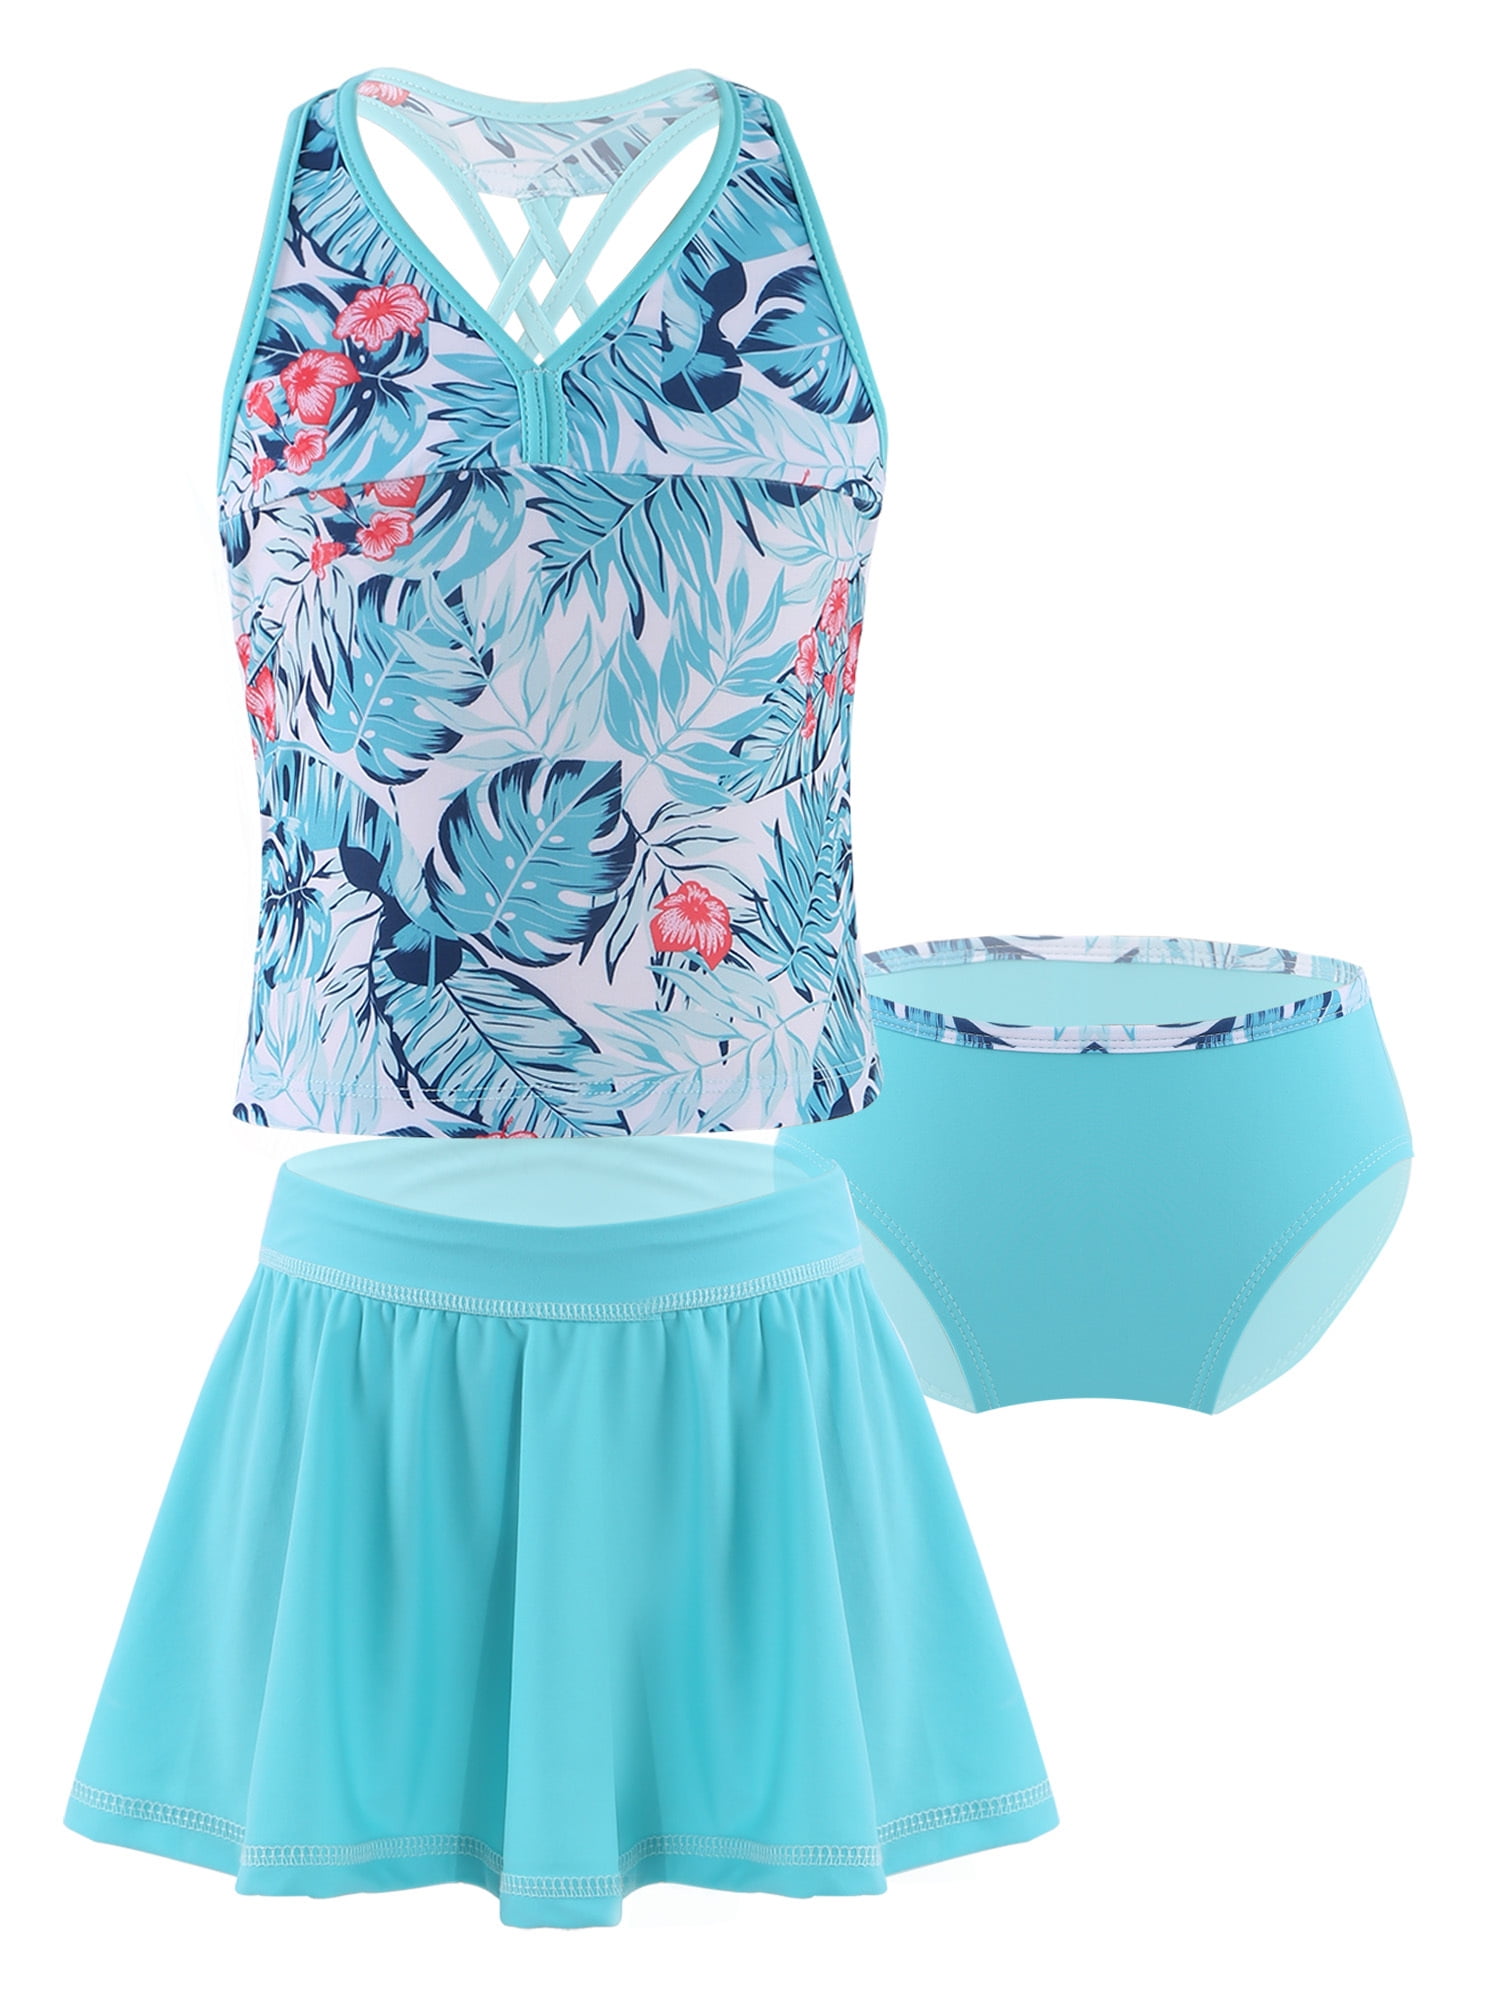 CHICTRY Kids Girls 3pcs Tankini Sets Halter Top Swimwear Swimsuit with Ruffle Skirt 